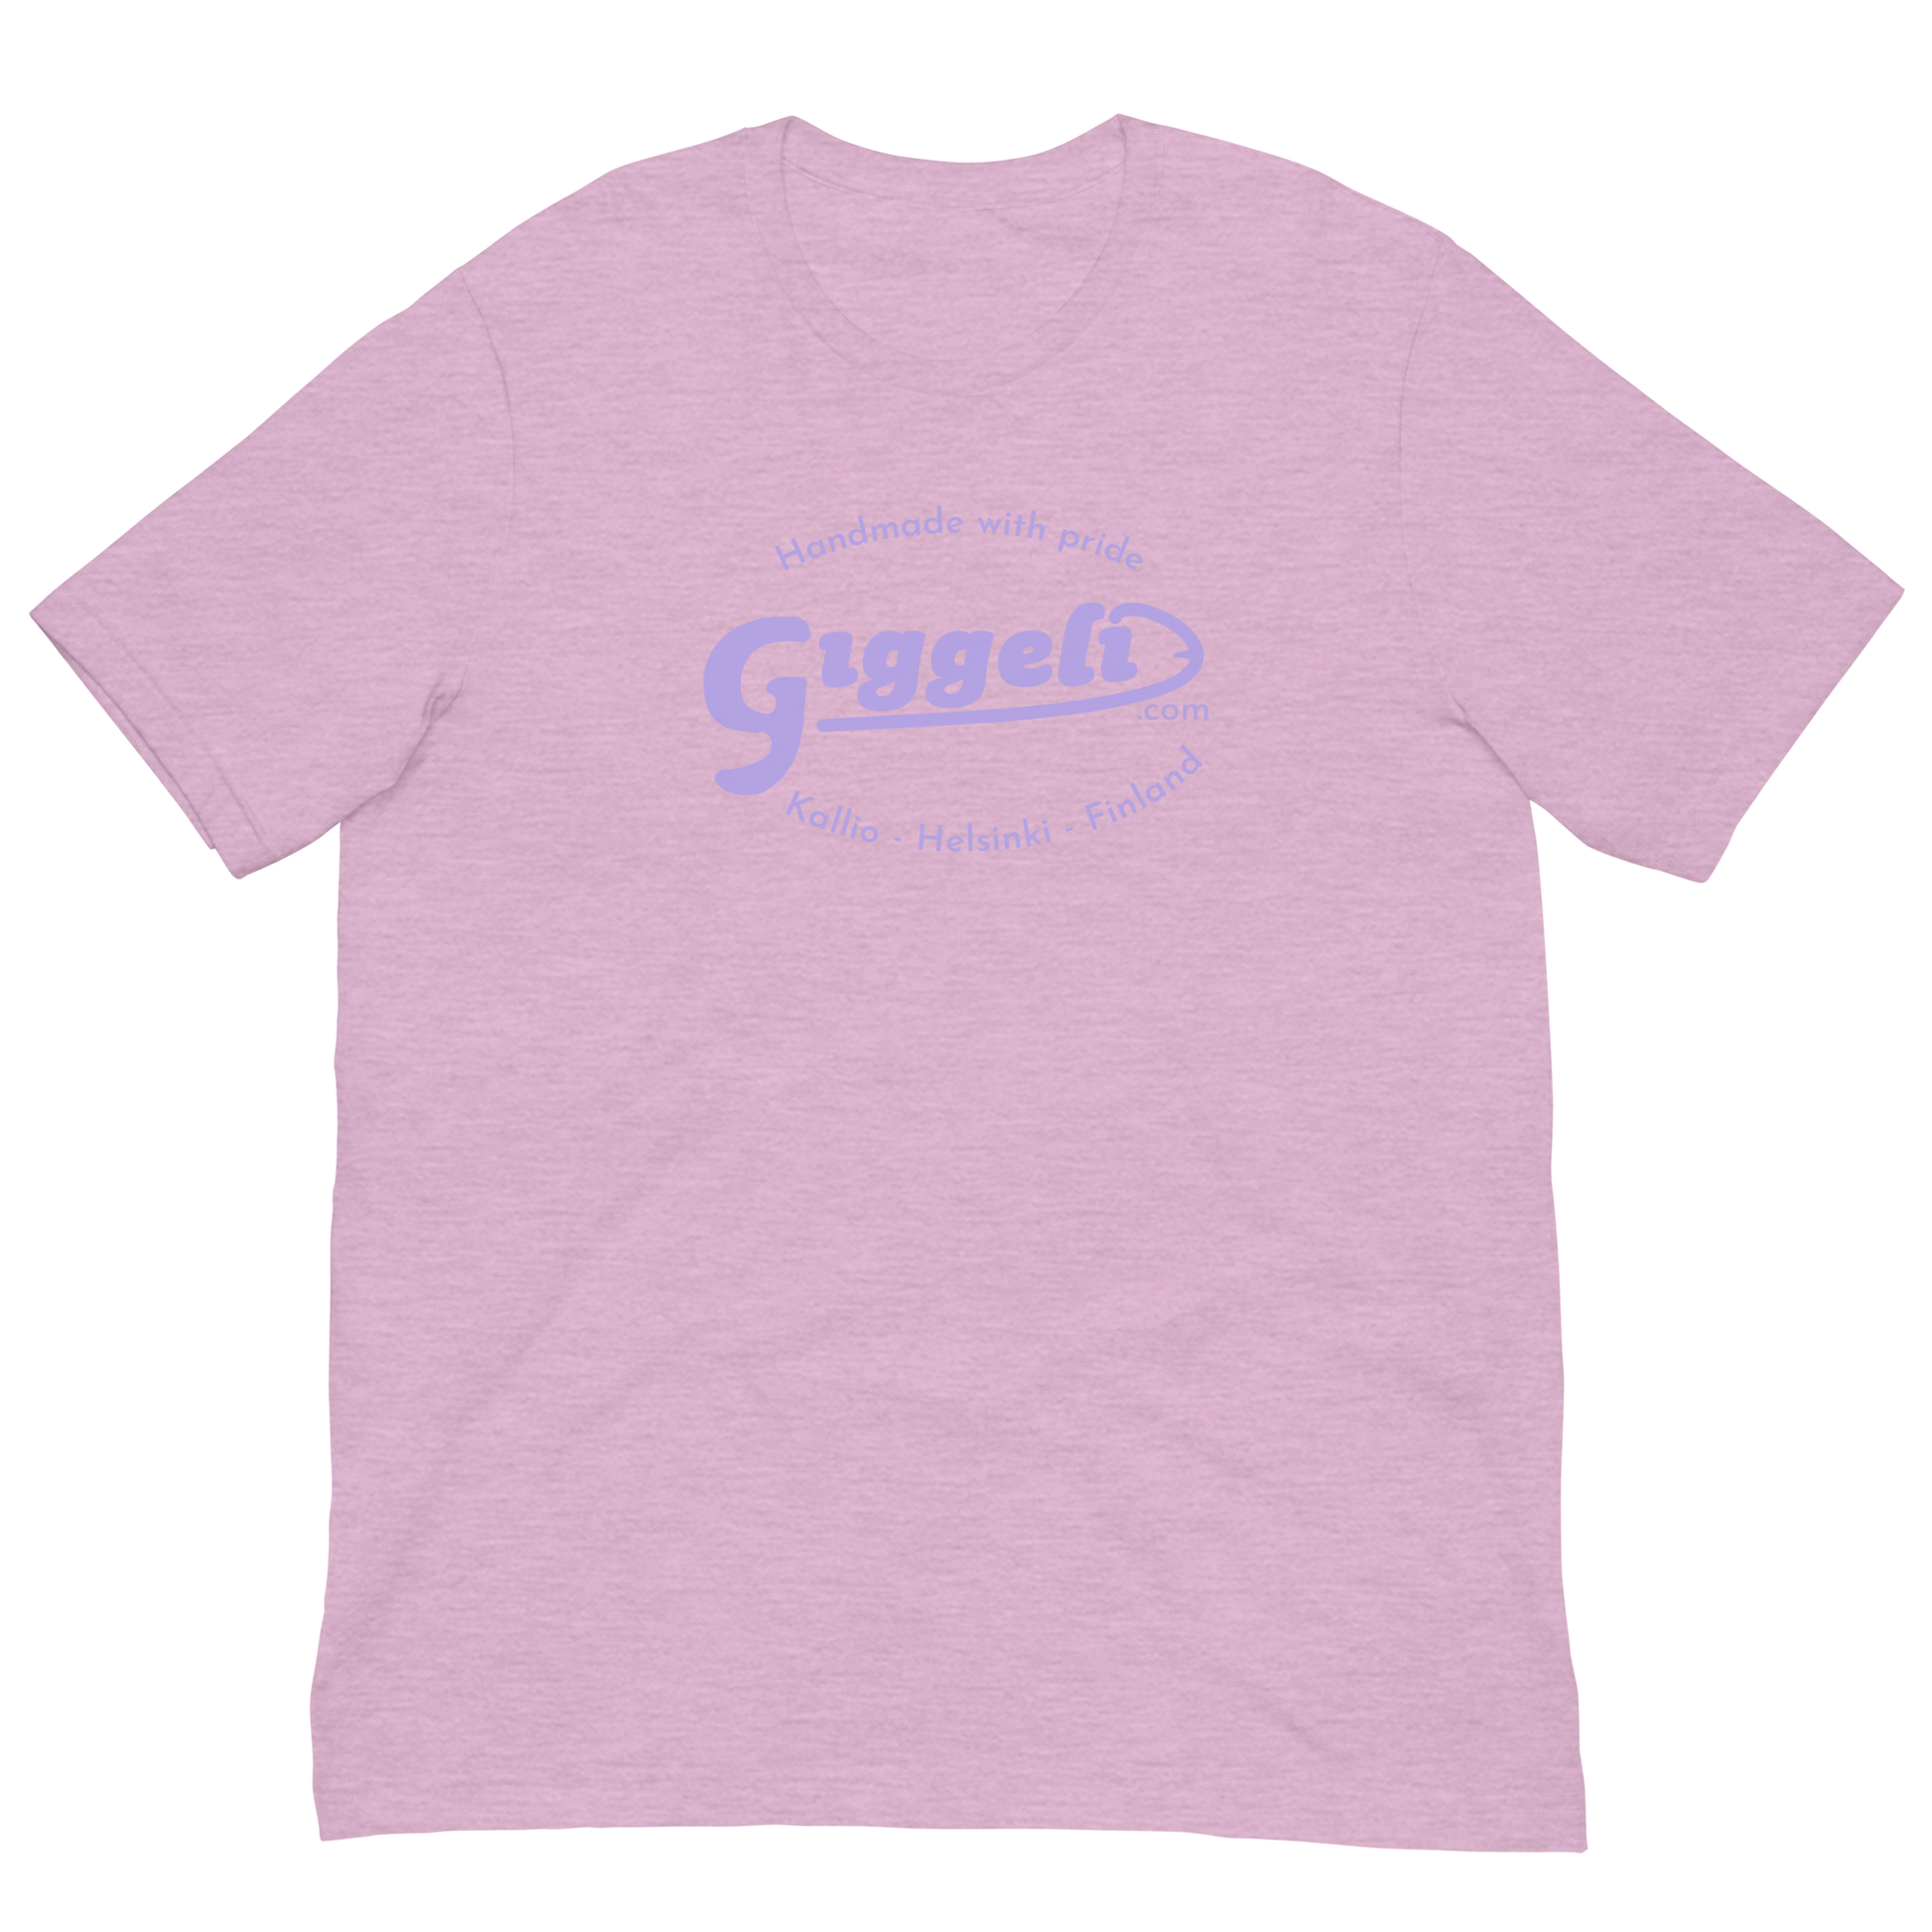 Giggeli T-shirt